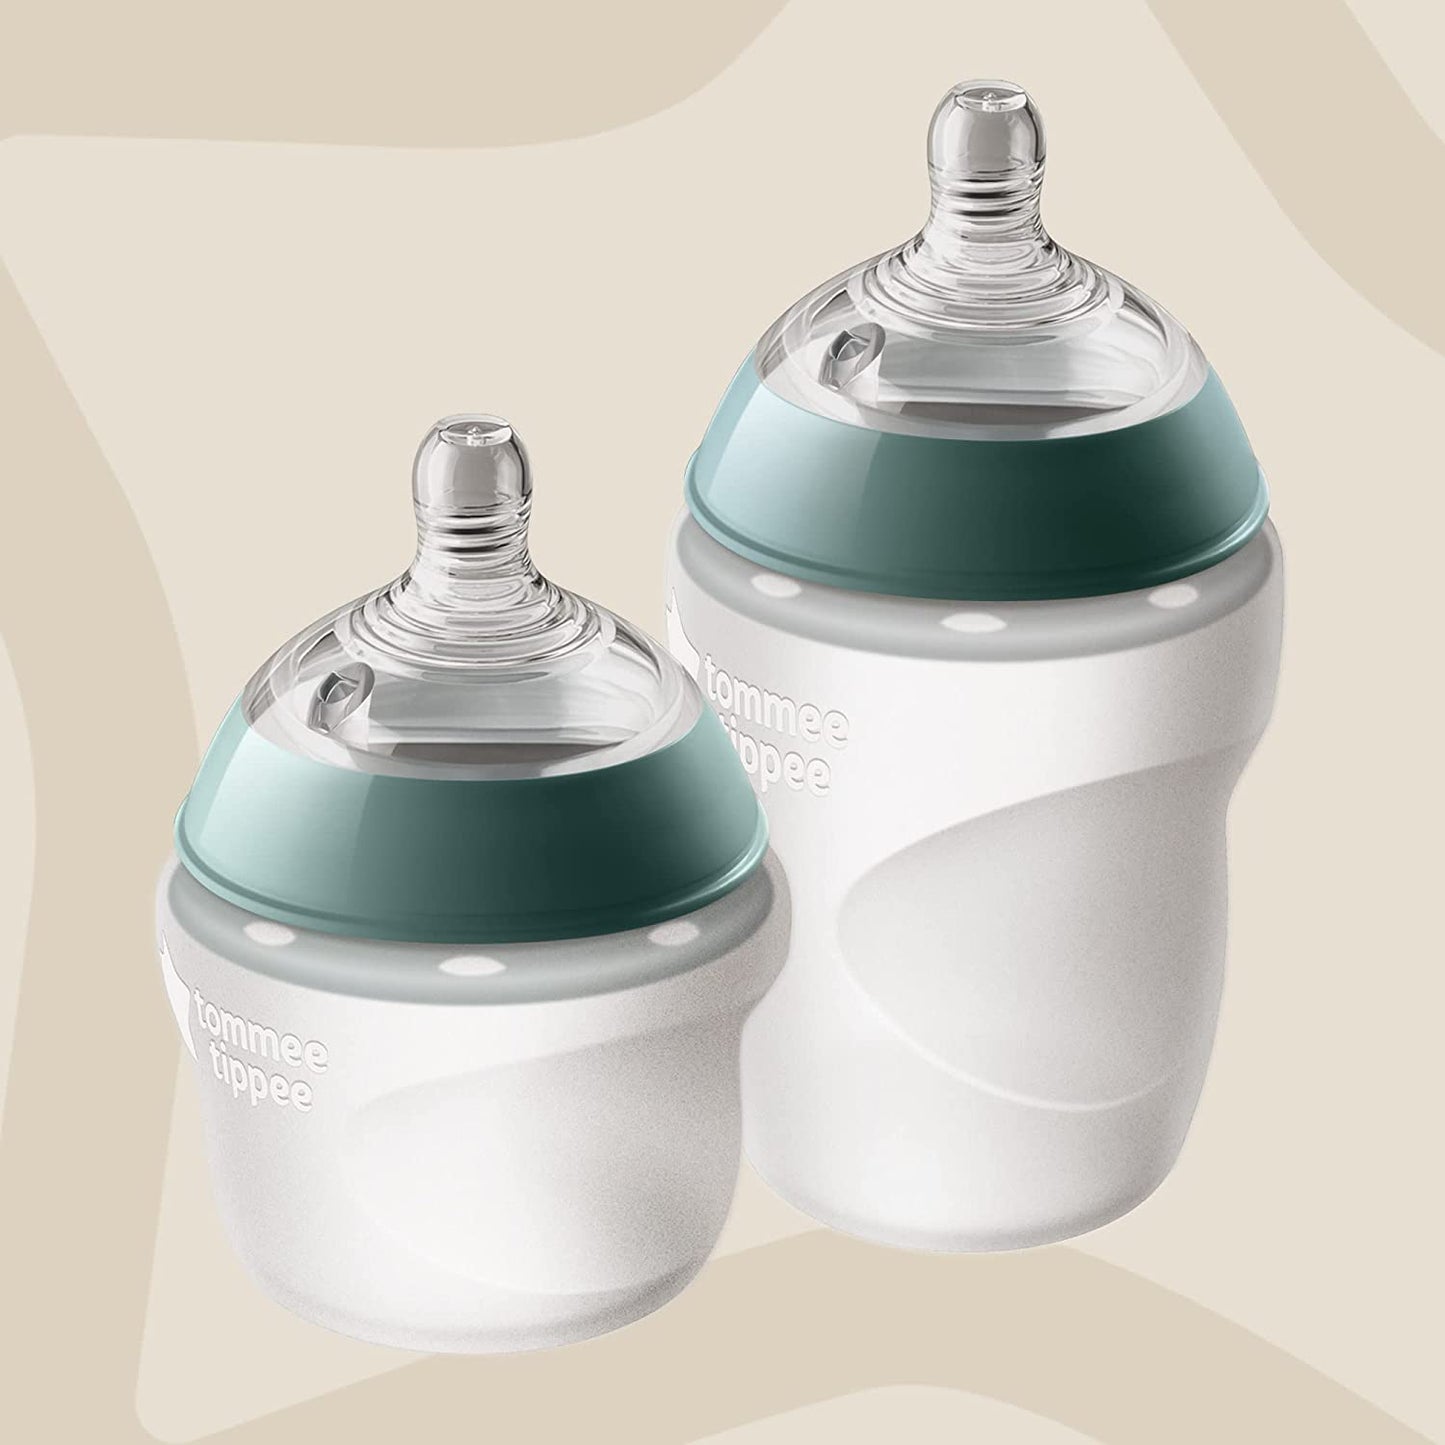 Tommee Tippee Closer to Nature - Mamadeiras de silicone para bebês 2x 260 ml